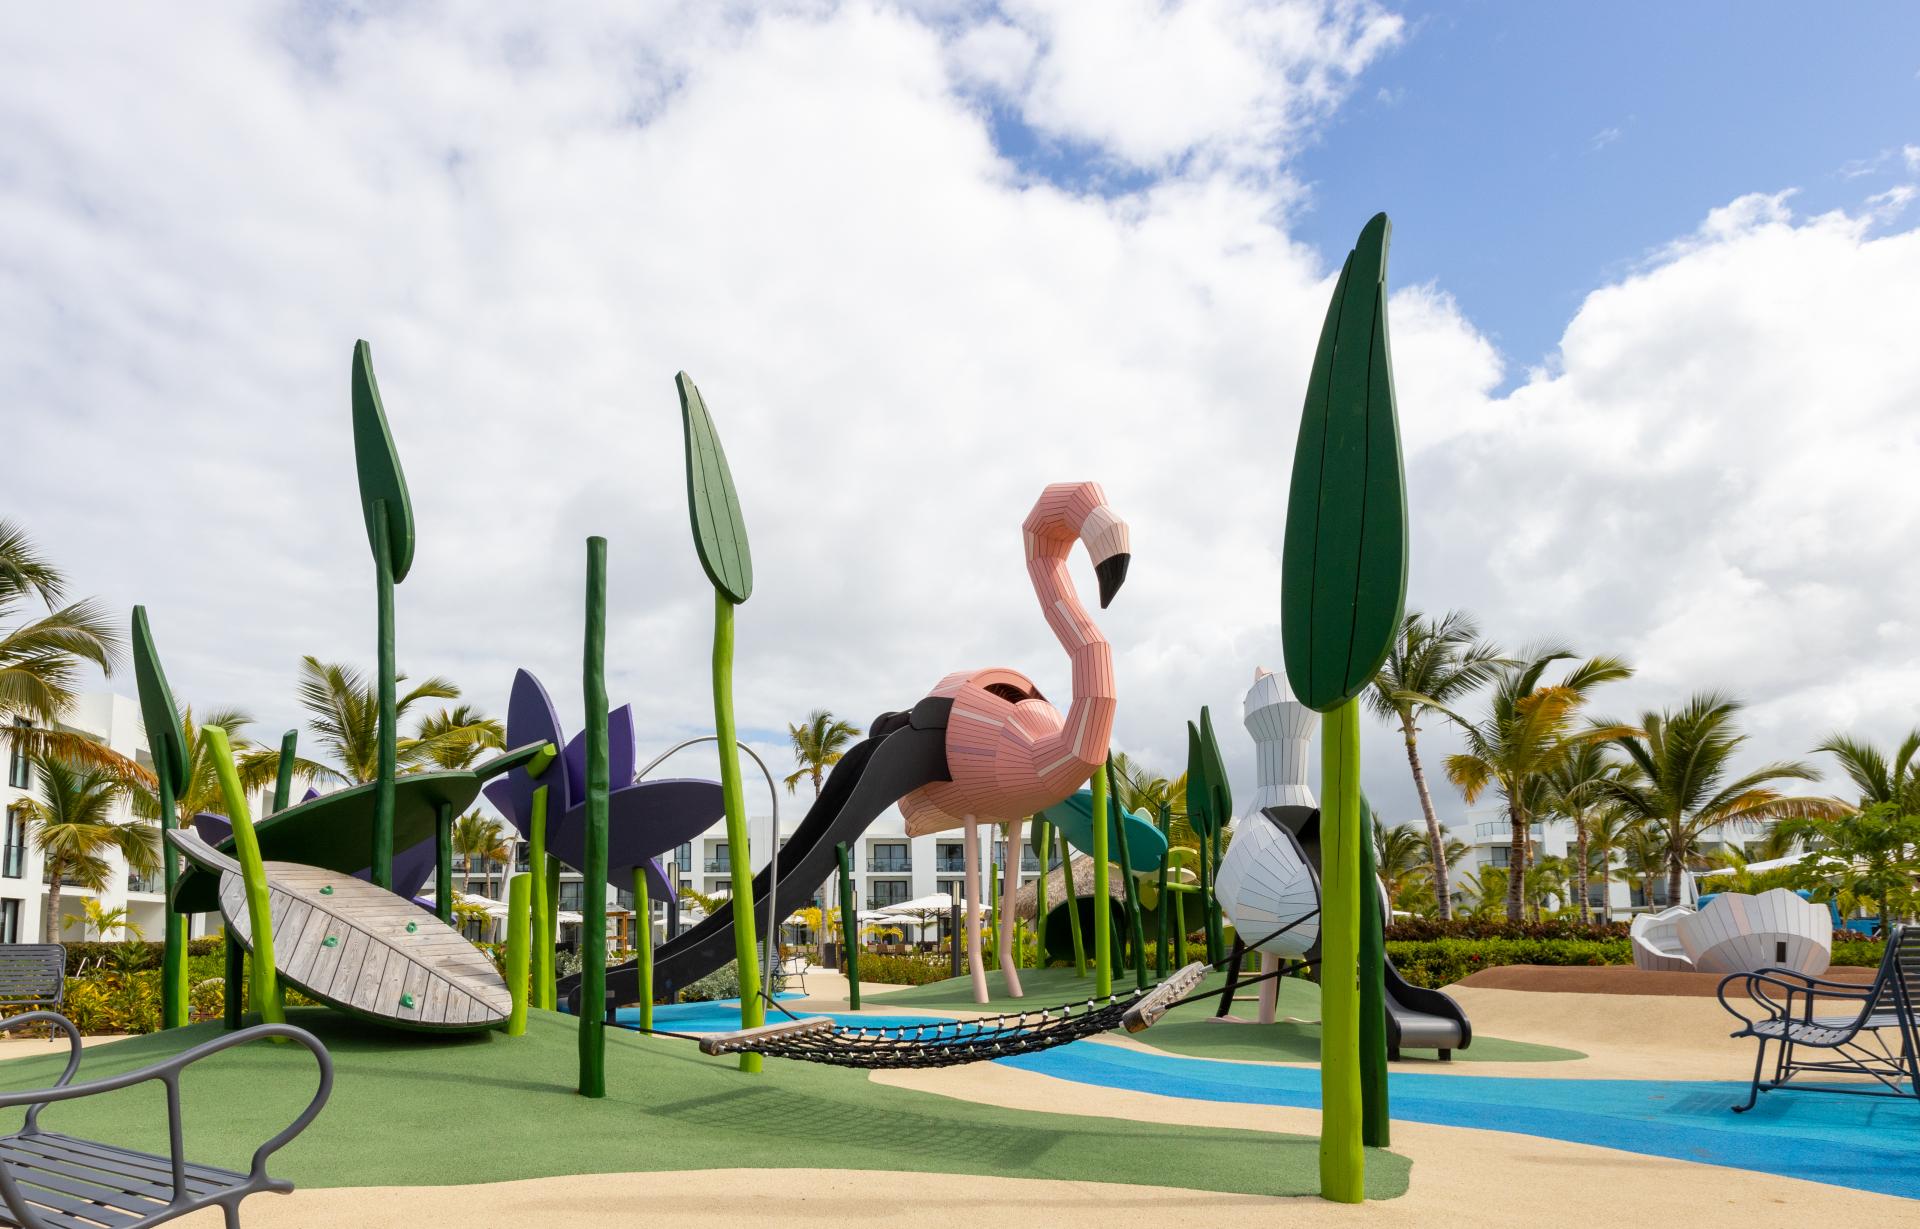 Overview of Flamingo playground